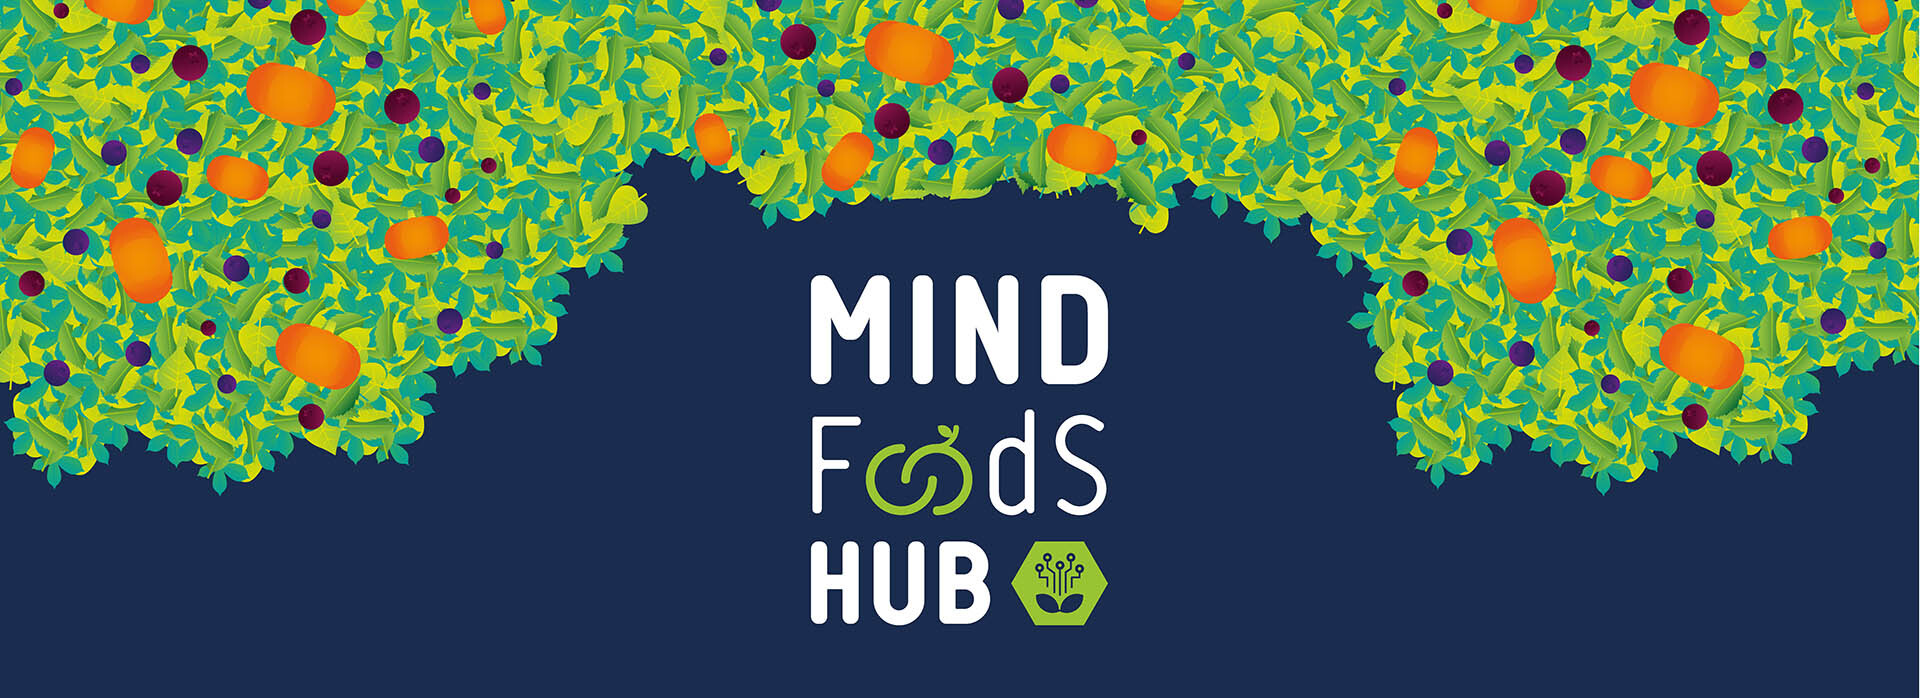 Al via MIND FoodS HUB: progetto innovativo di ricerca agroalimentare